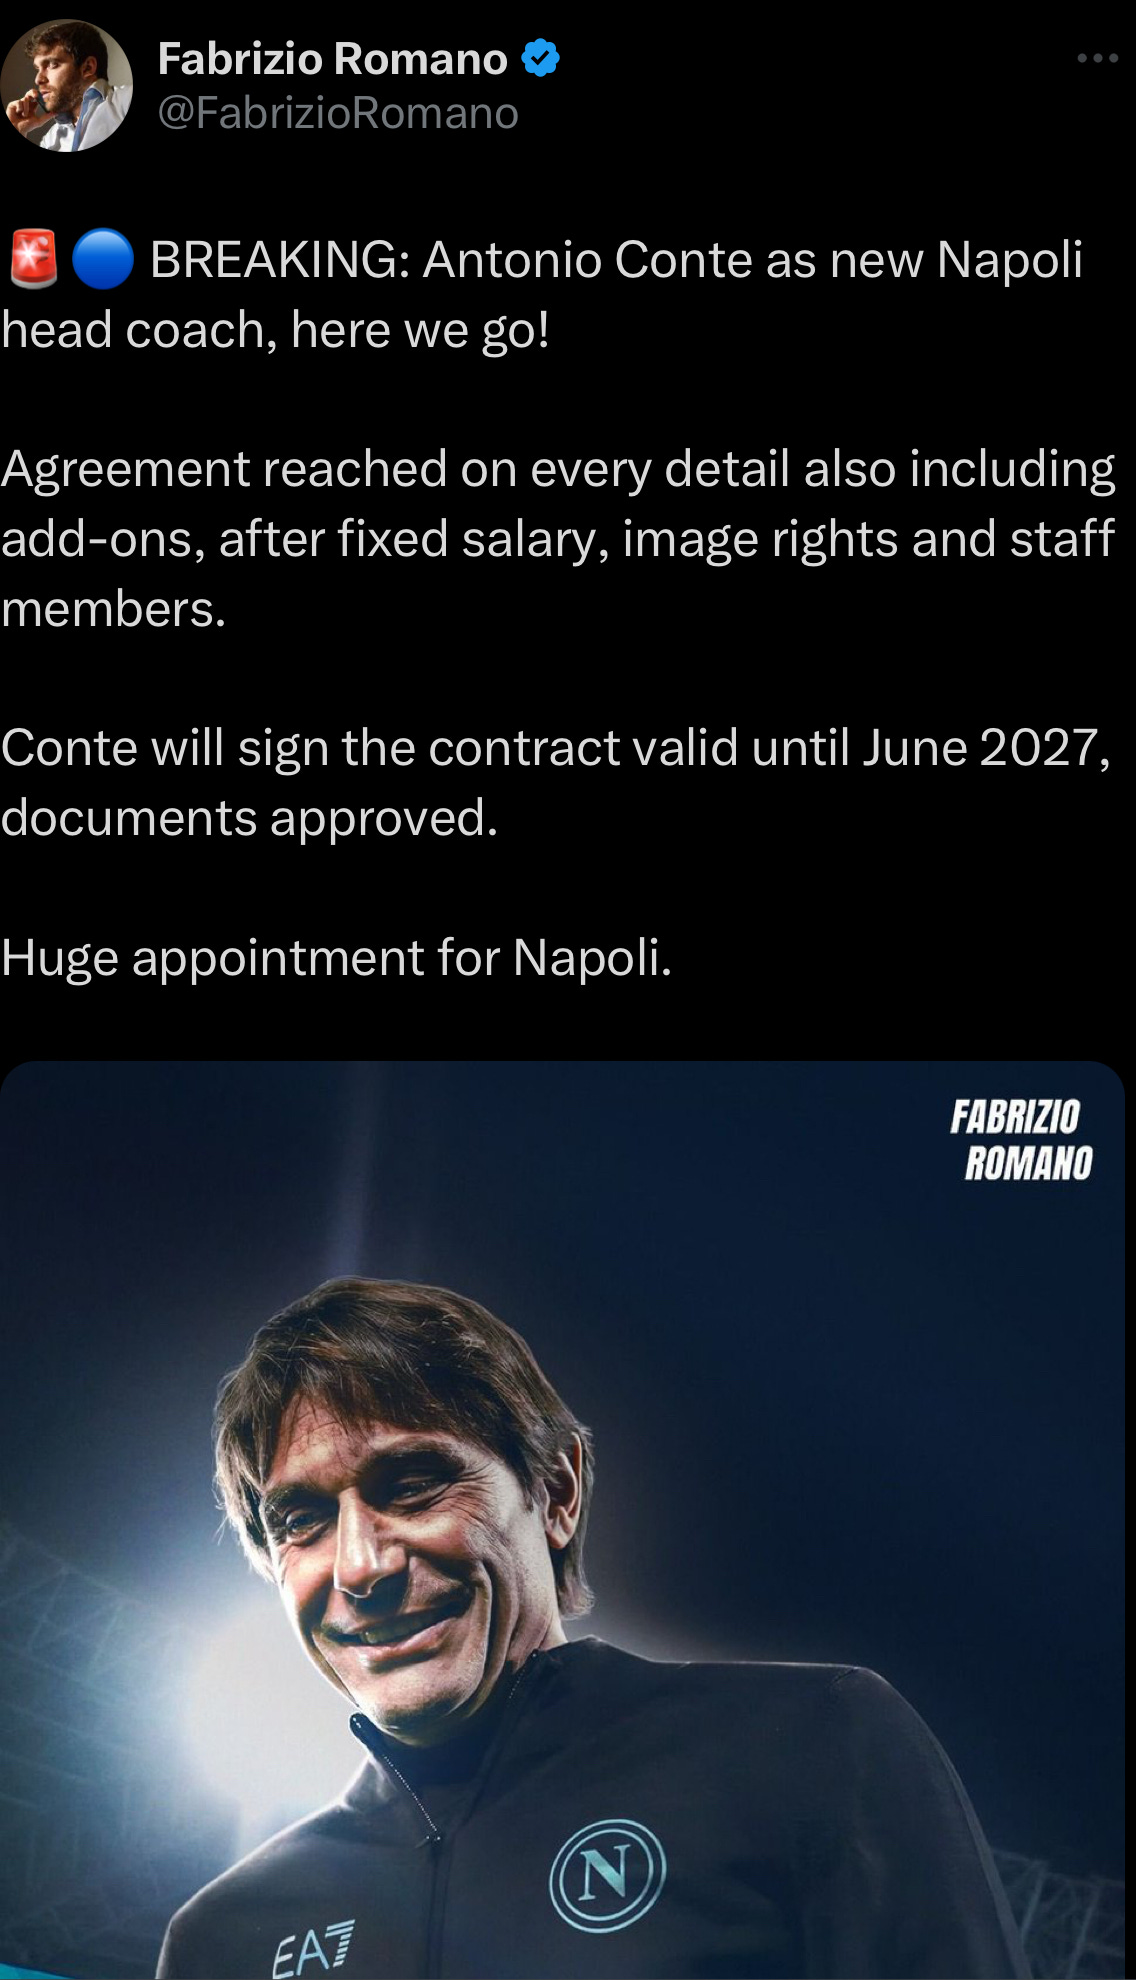 A tweet from Fabrizio Romano confirming Antonio Conte's move to Napoli.